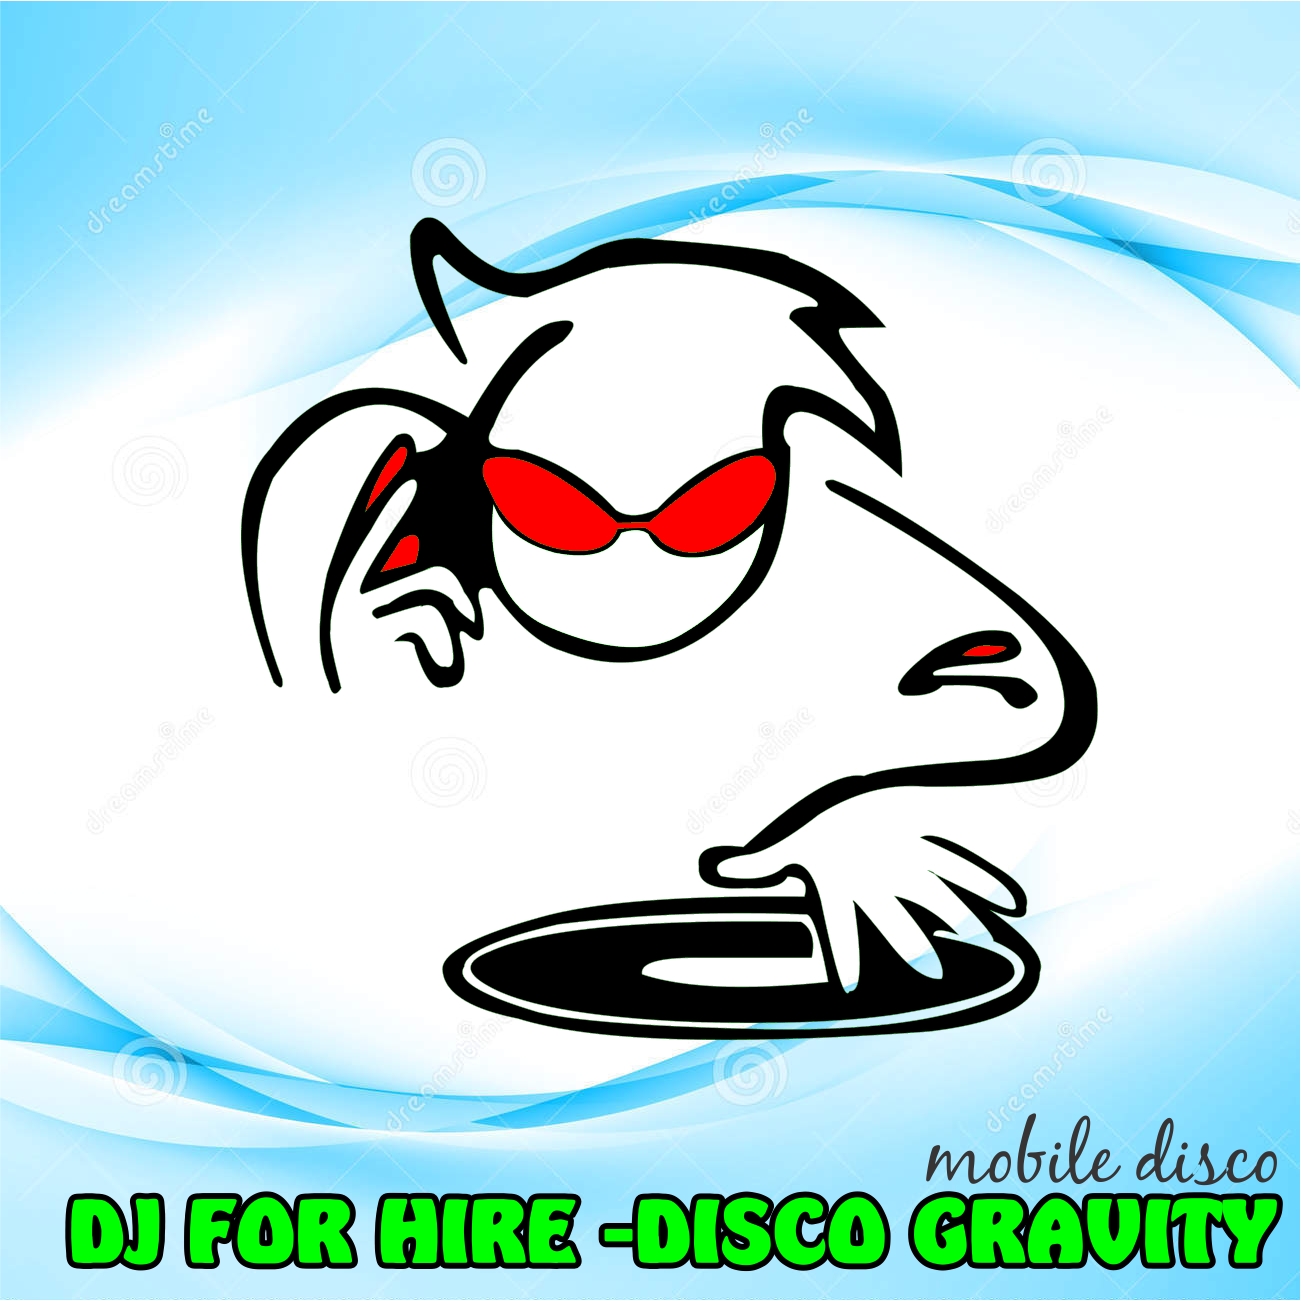 CLICK ME MOBILE DISCO GRAVITY MOBILE DJ FOR HIRE DJ RAJEN 0315072463 DURBAN SOUND DJ RAJEN DISCO GRAVITY IN DURBAN MOBILE DISCO FOR HIRE MOBILE DJ IN DURBAN FOR HIRE PROFESSIONAL DJ FOR HIRE HOTTEST DJ IN DURBAN DJ RAJEN 0837252146  DISCO FOR HIRE 0315072736